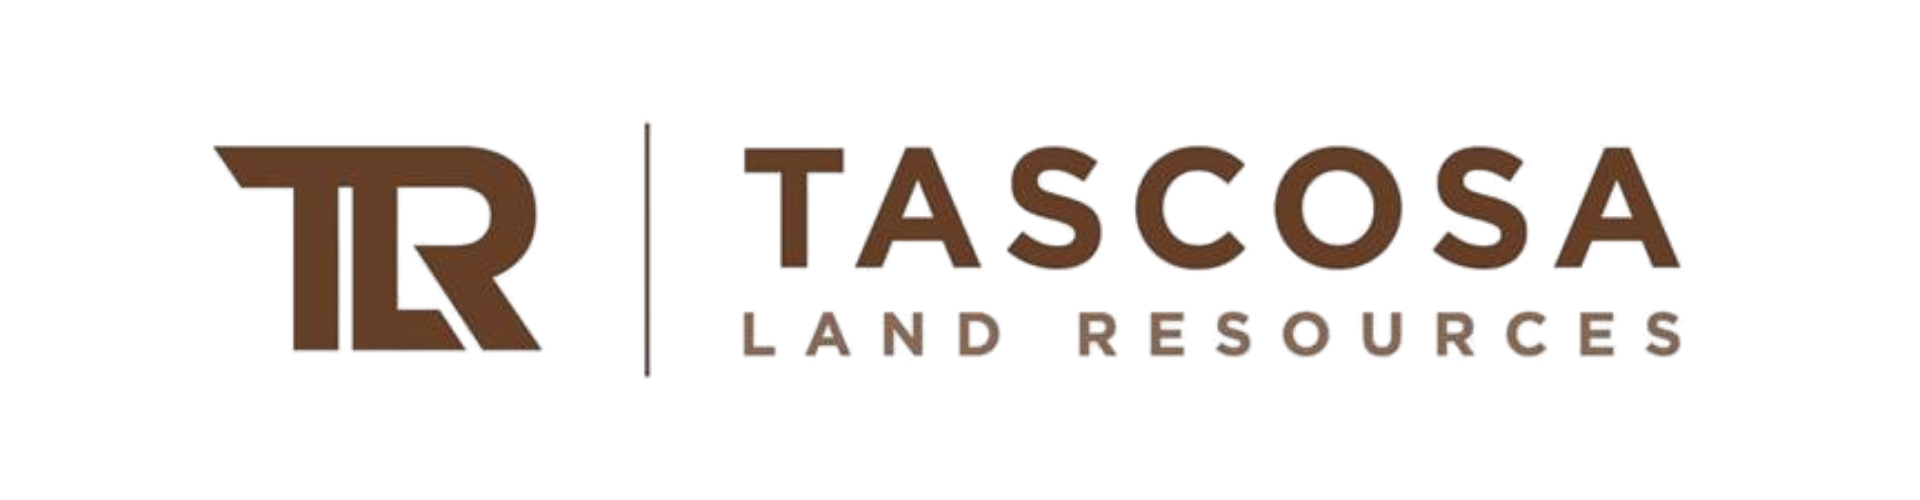 Tascosa Land Resources